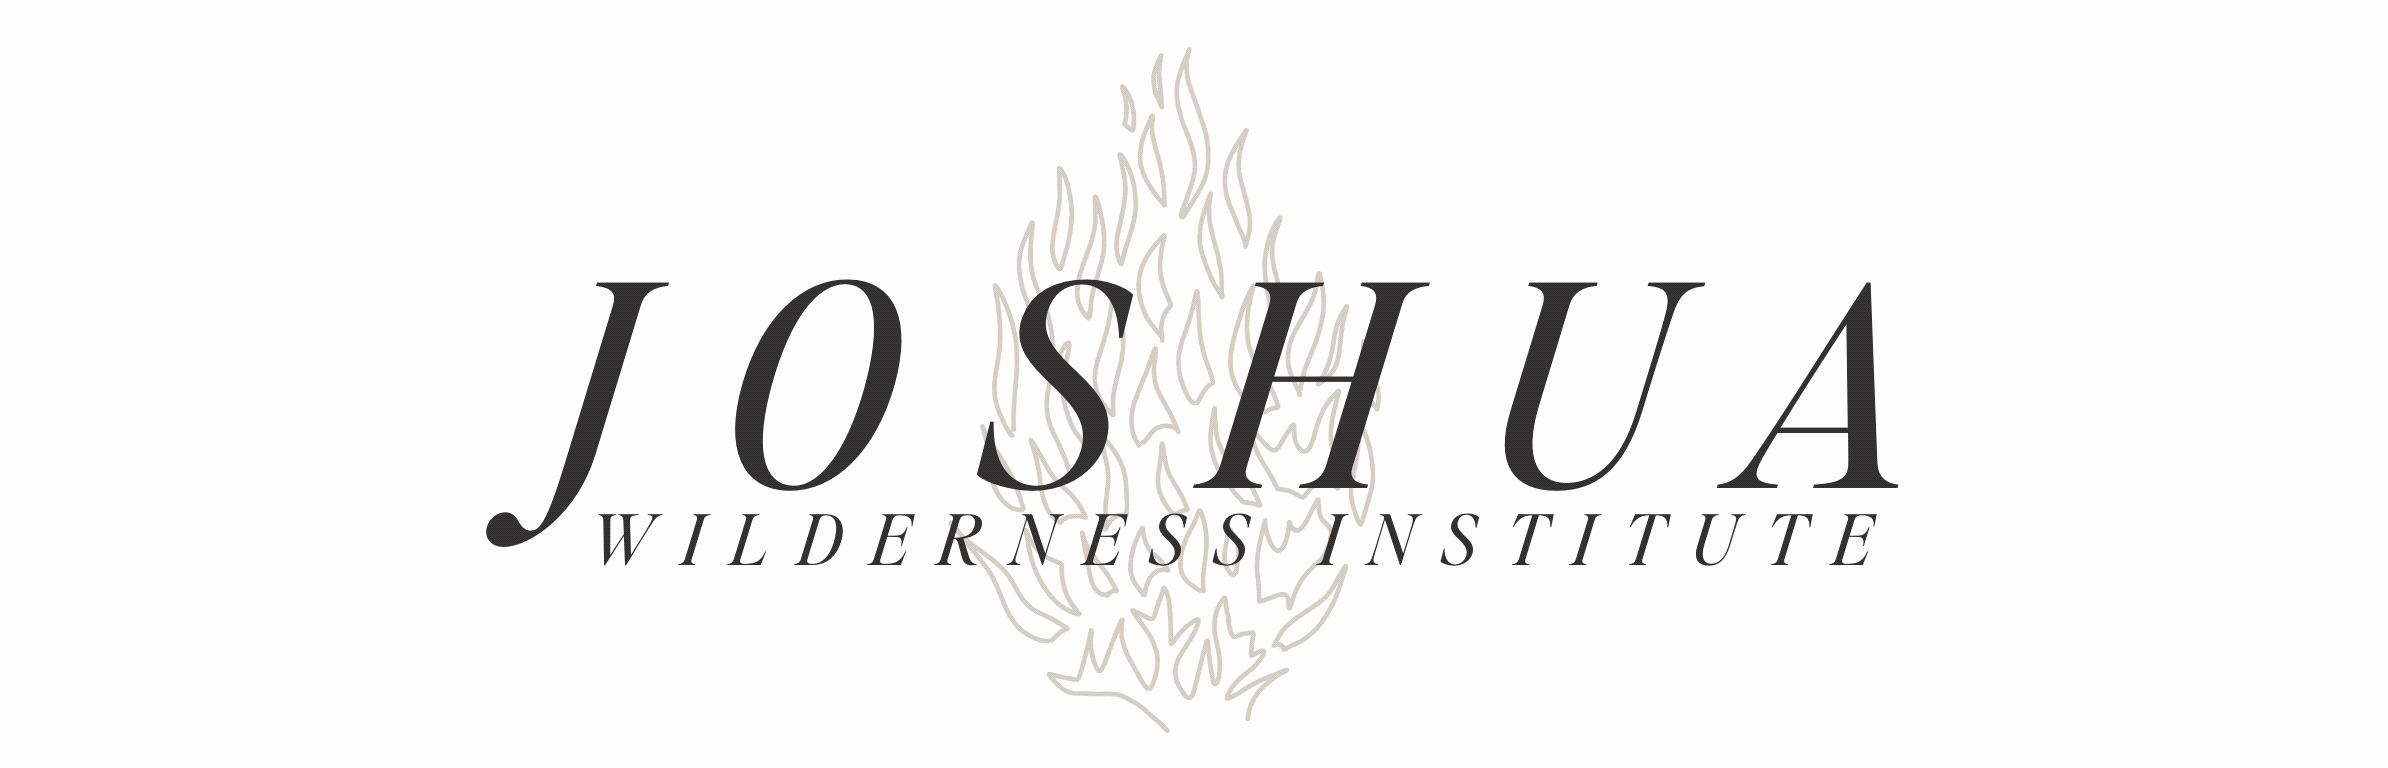 Joshua Wilderness Institute Burning Bush Logo